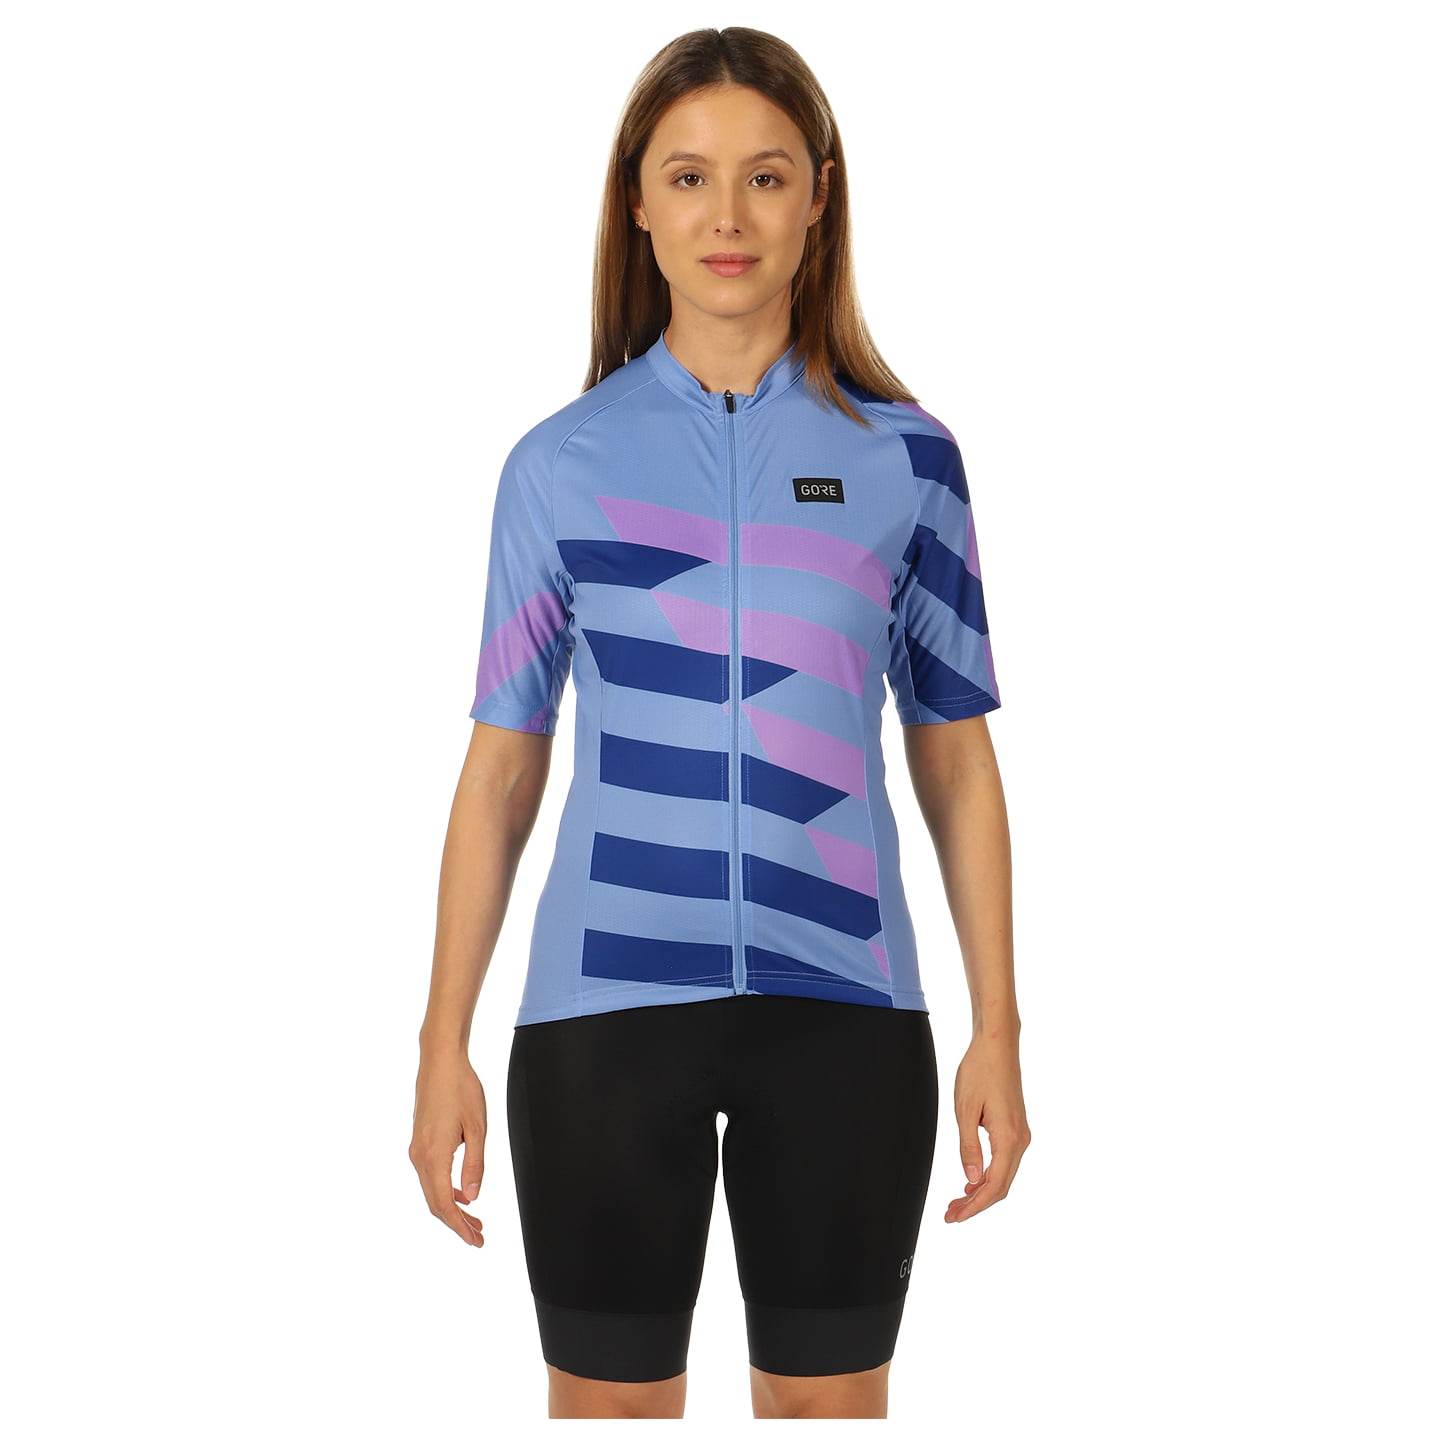 GORE WEAR Spirit Signal Chaos Women’s Set (cycling jersey + cycling shorts) Women’s Set (2 pieces), Cycling clothing